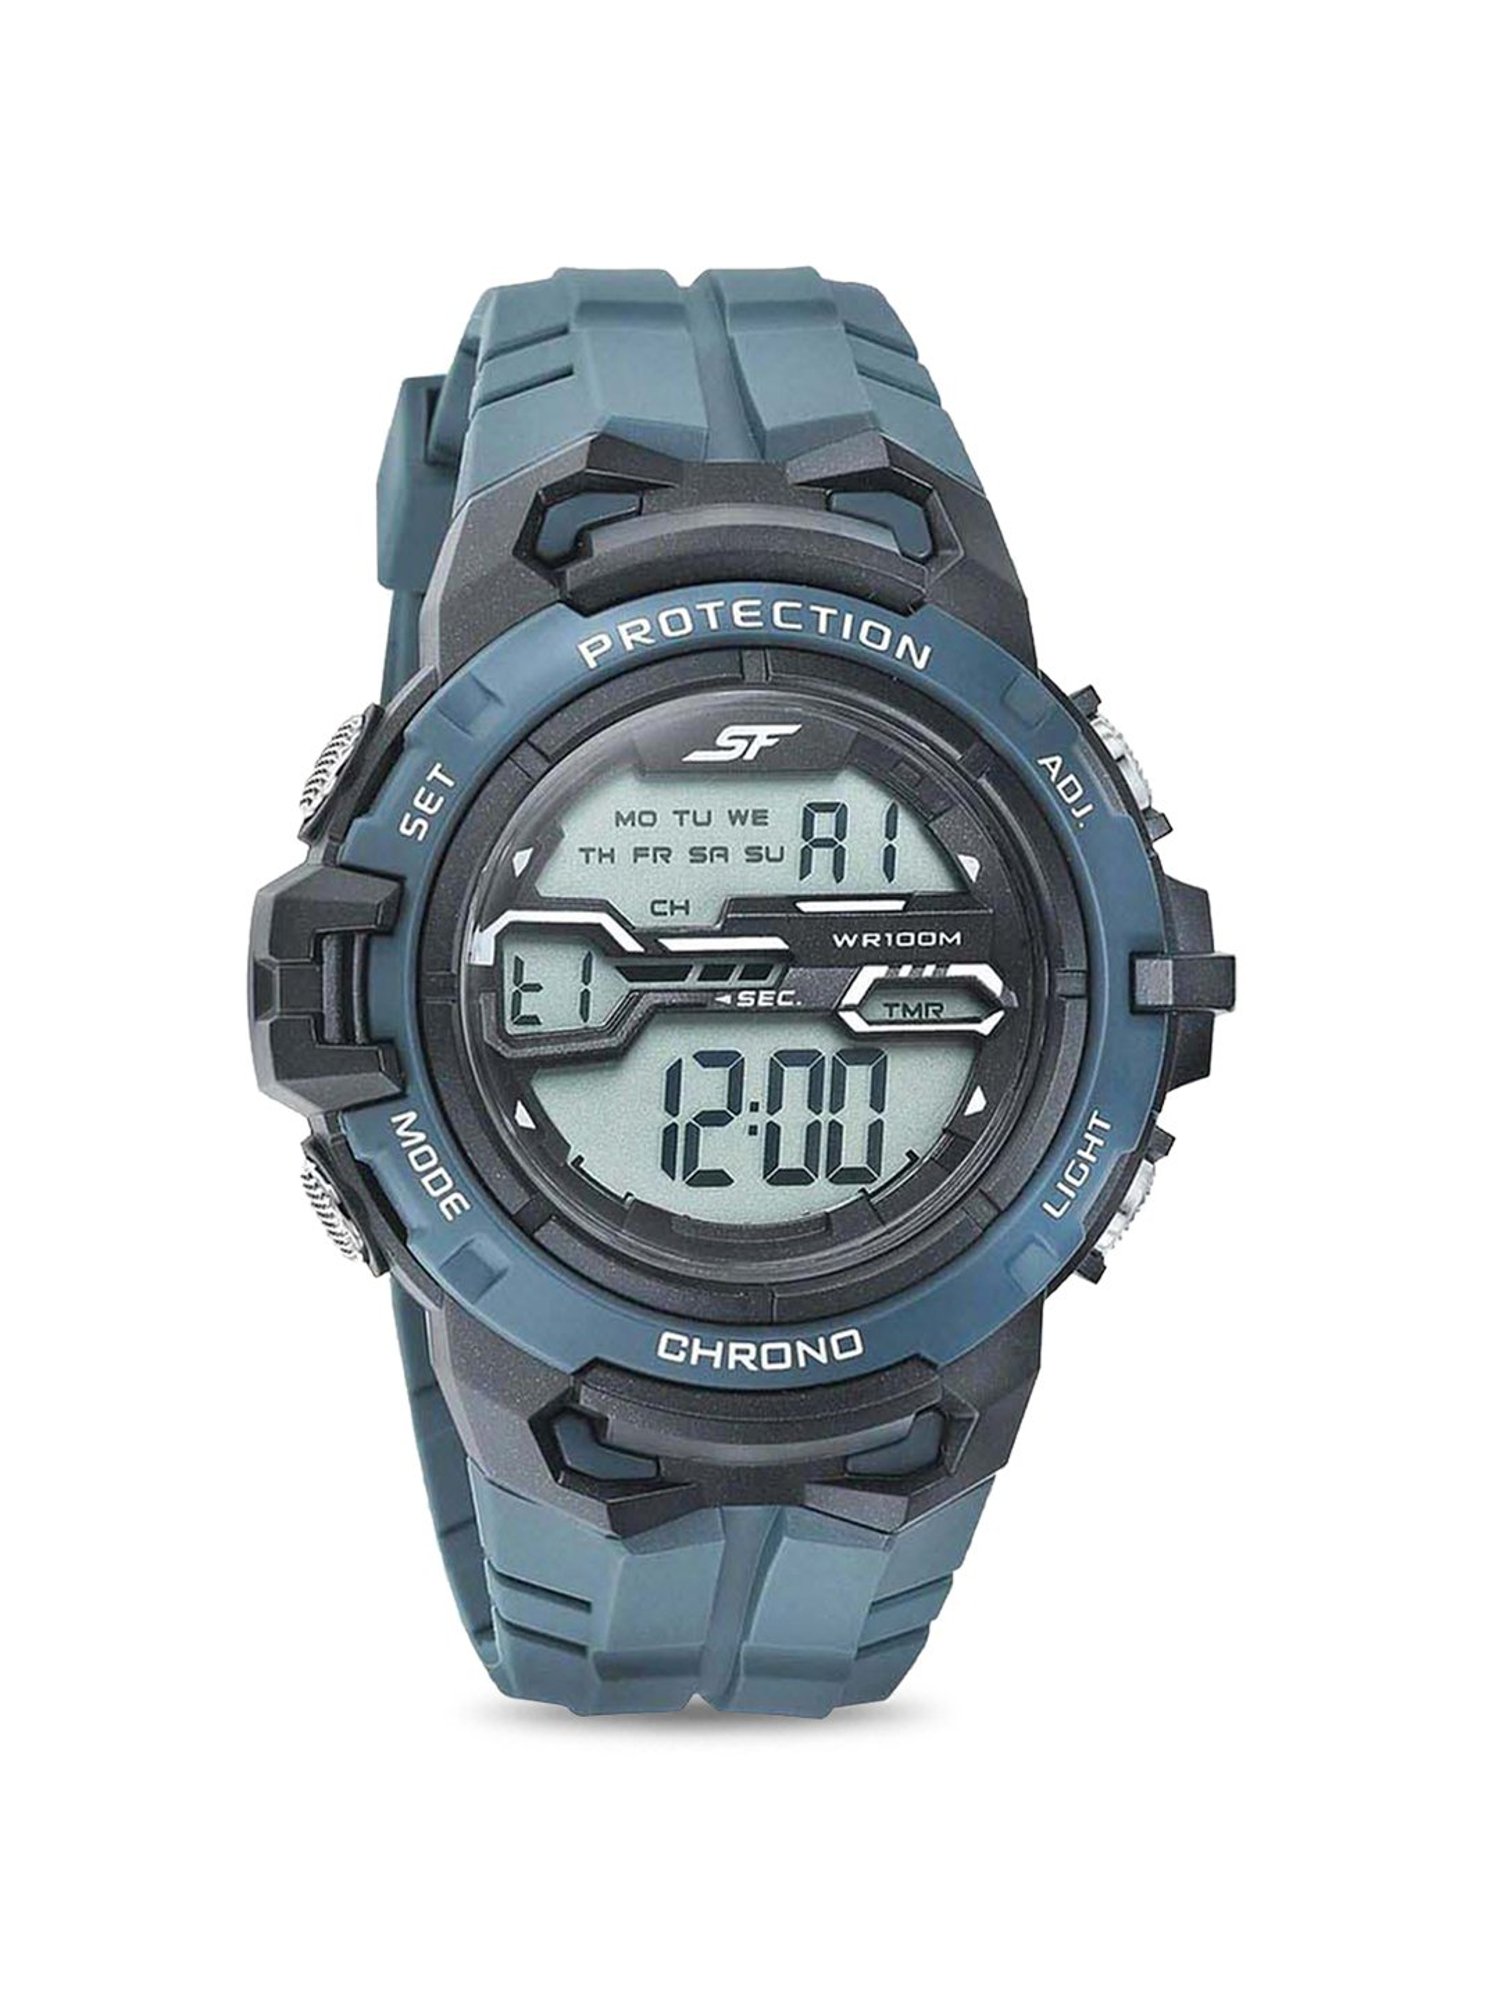 Sonata Analog watch For Men-NR77072PP01 : Amazon.in: Fashion